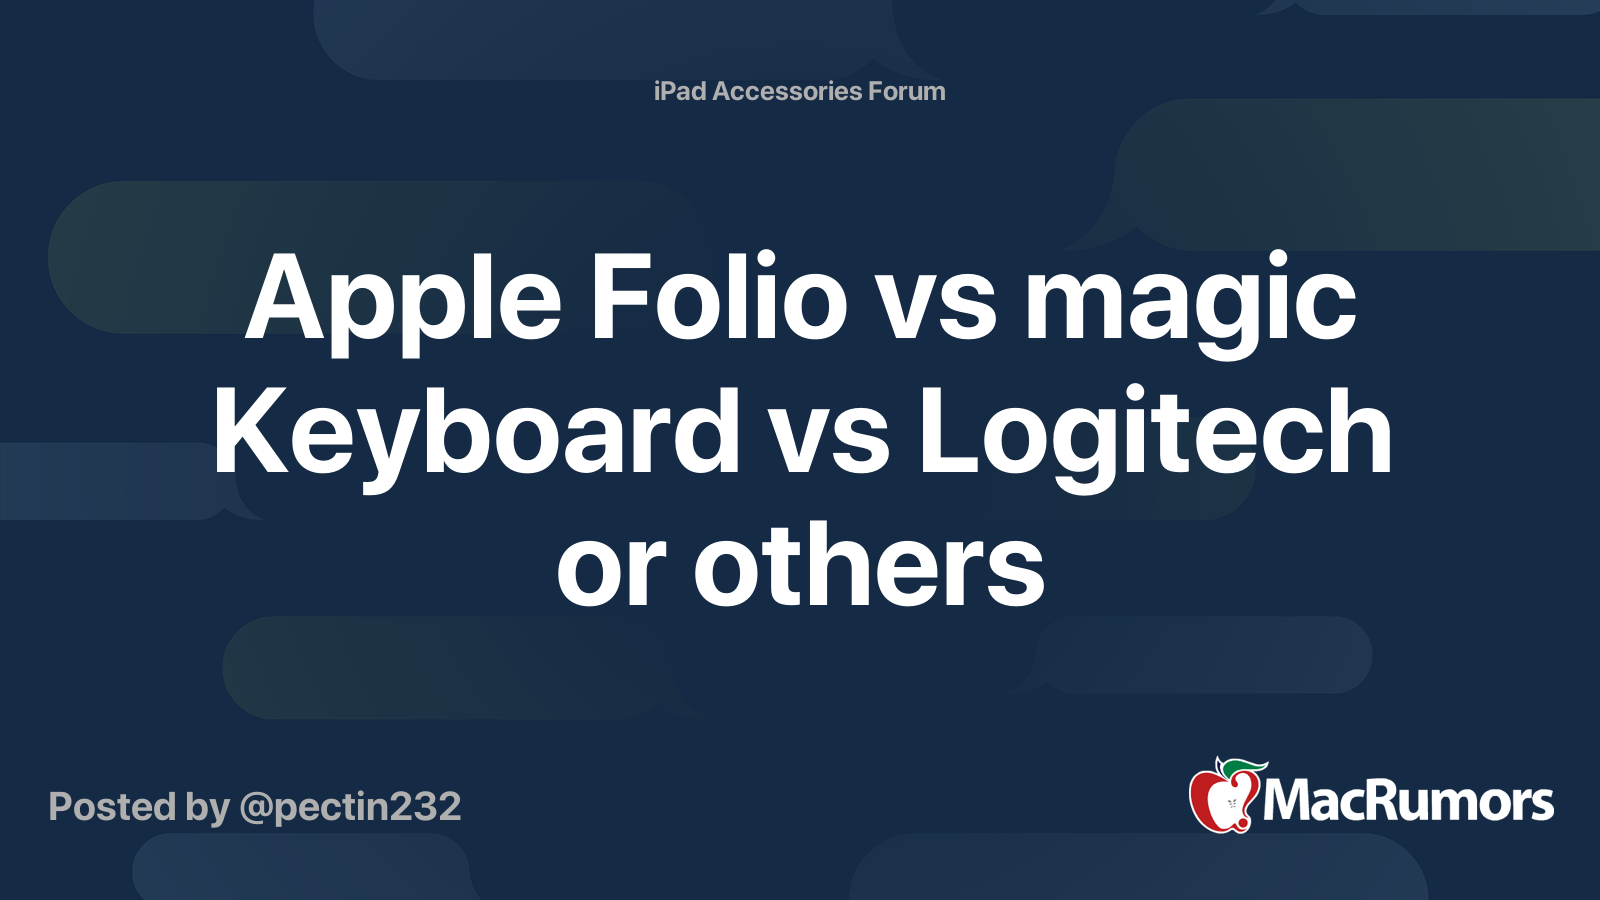 Compared: Apple's Magic Keyboard versus Smart Keyboard Folio for iPad